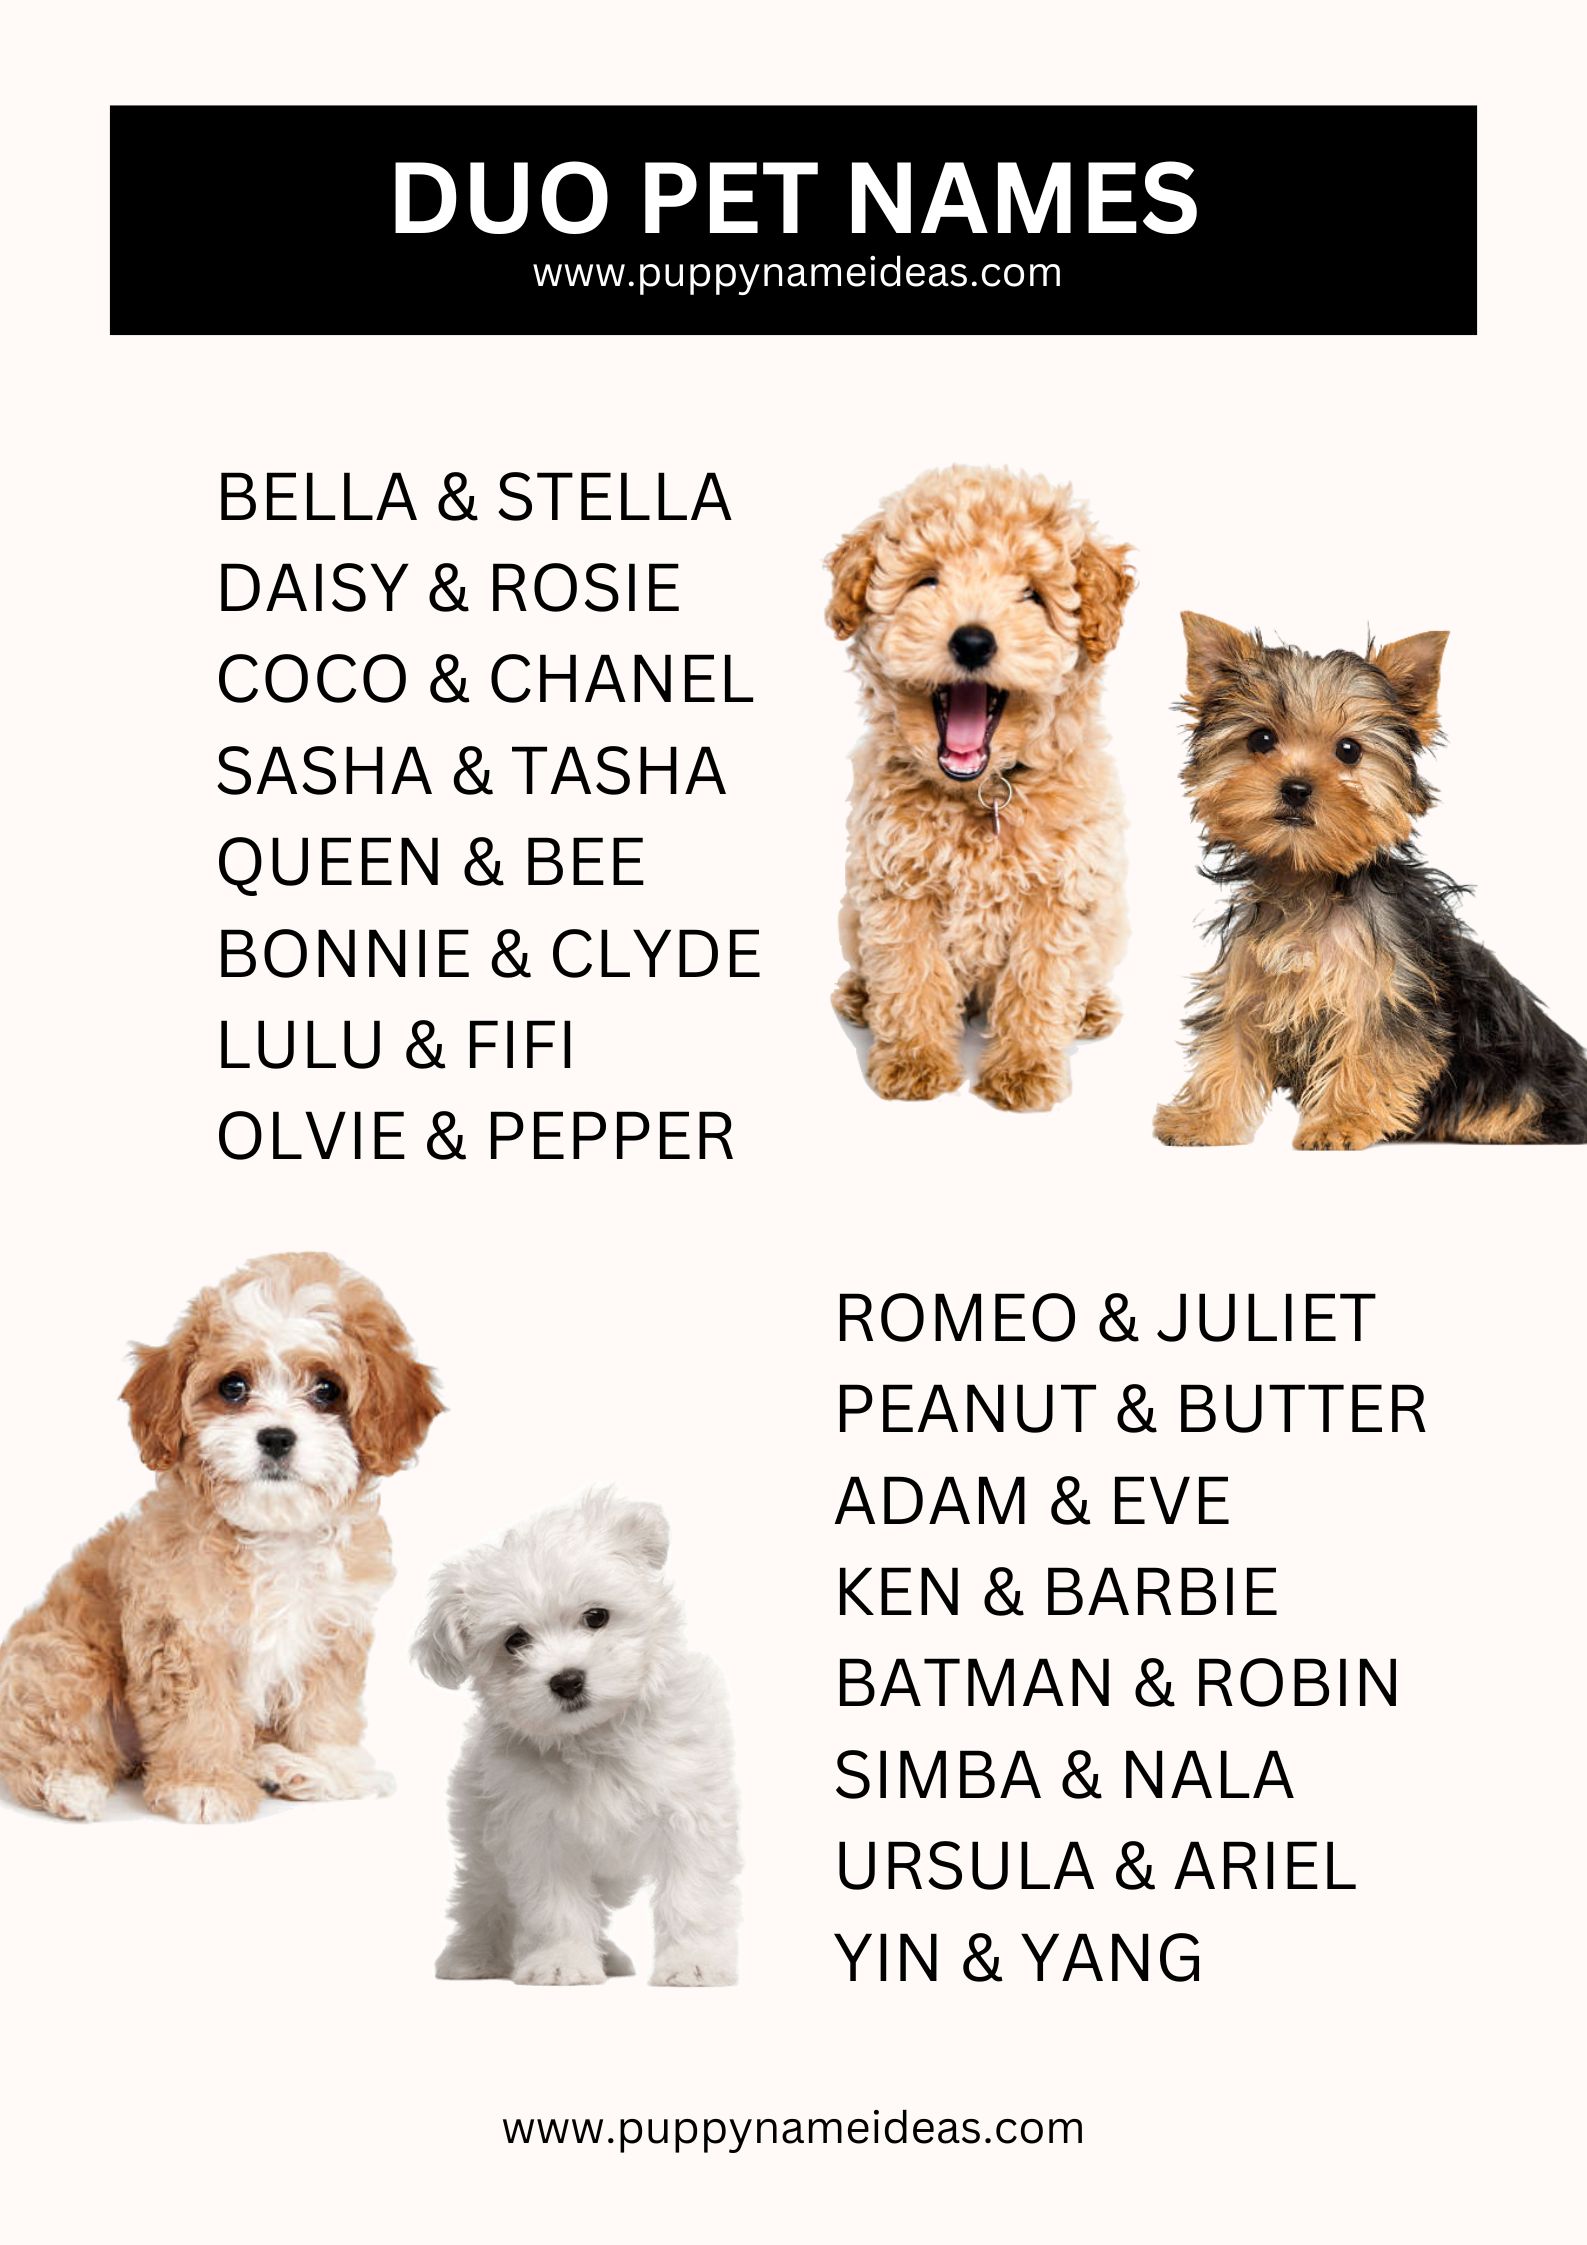 list of duo pet names